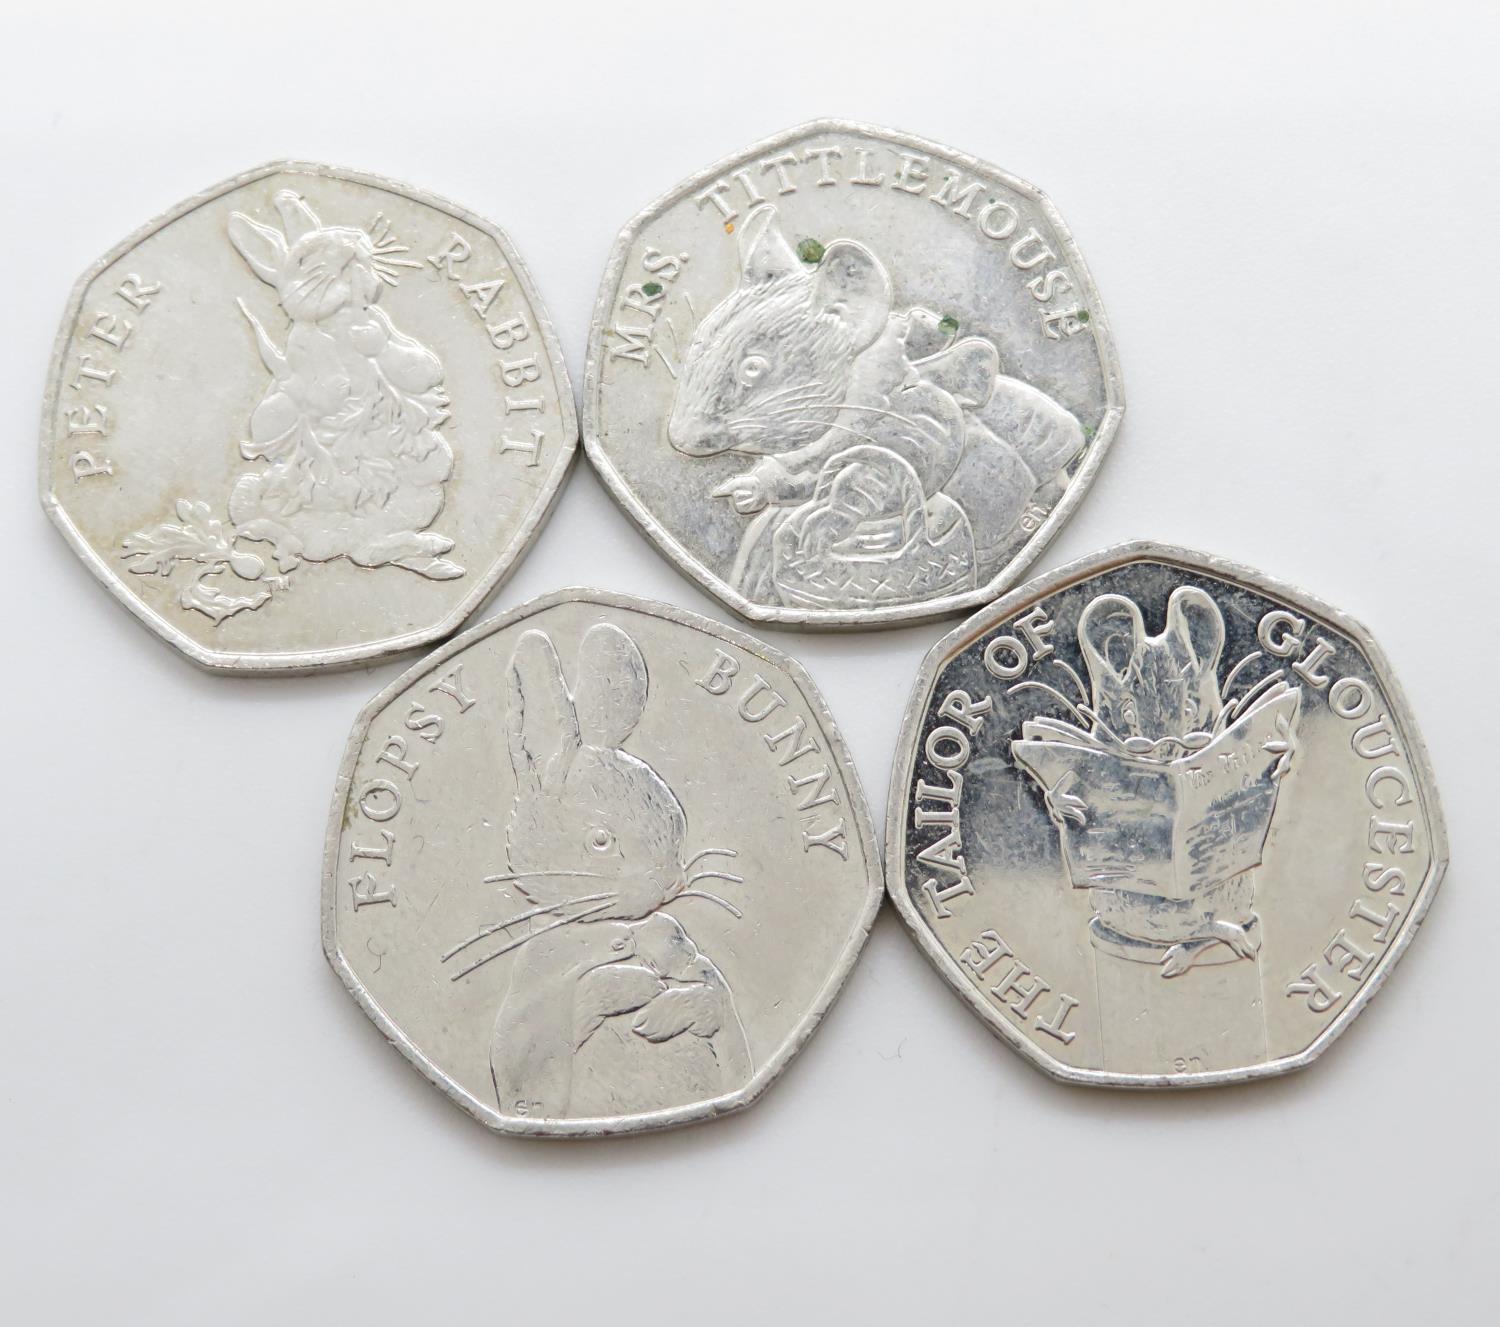 1 set of 2018 Beatrix Potter 50p coins including rare Flopsy Bunny